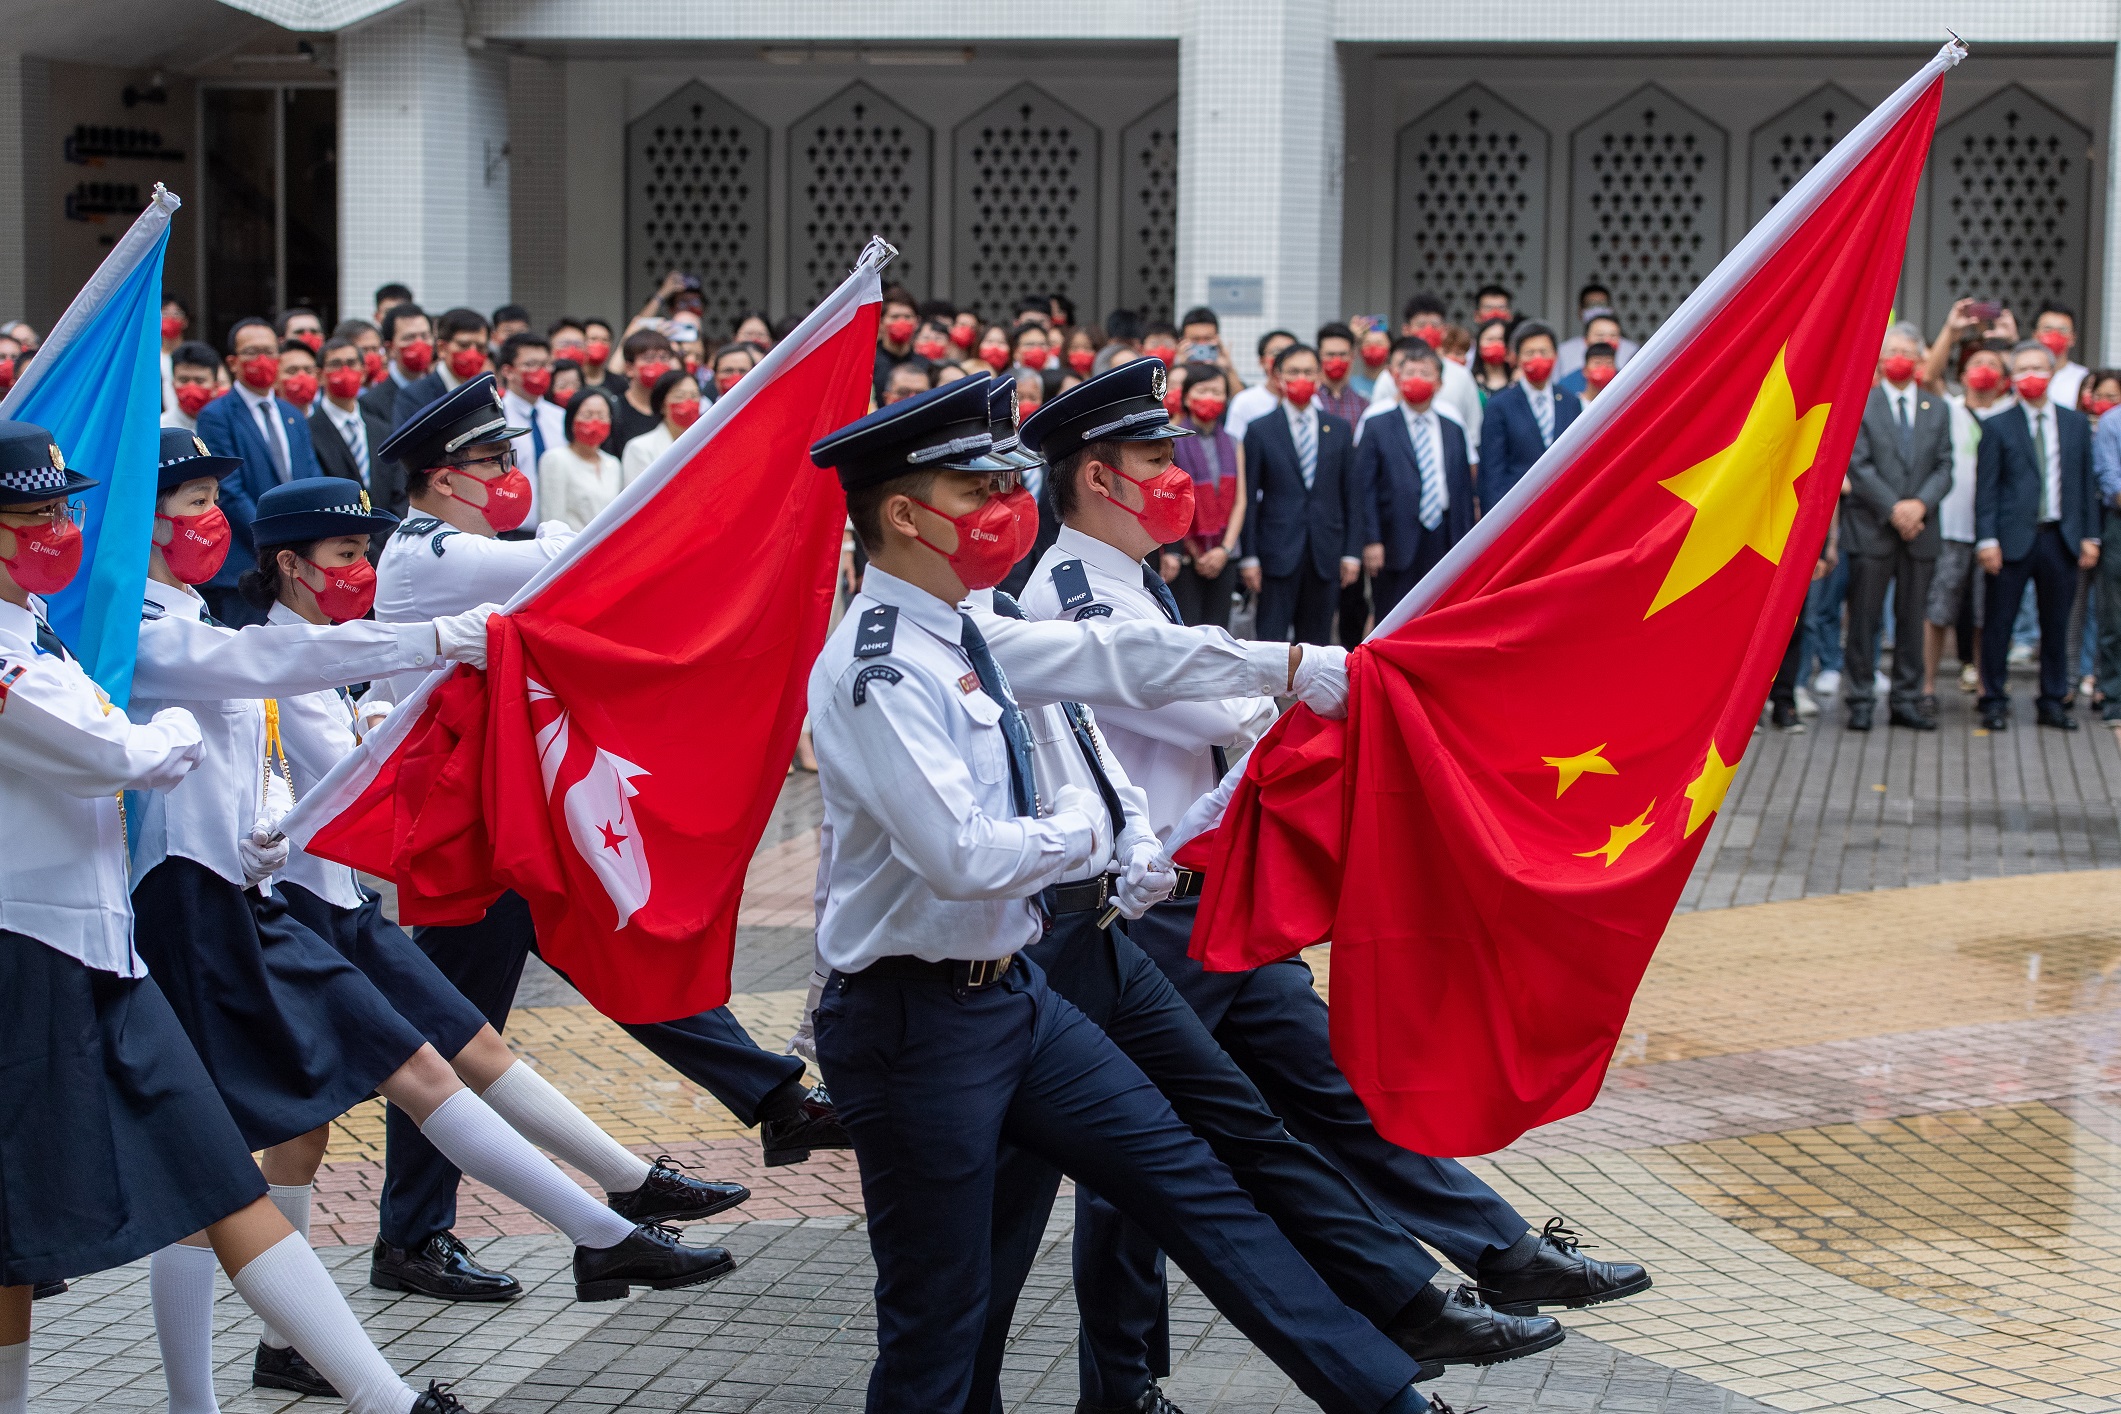 HKBU holds a flag-raising ceremony to celebrate National Day.